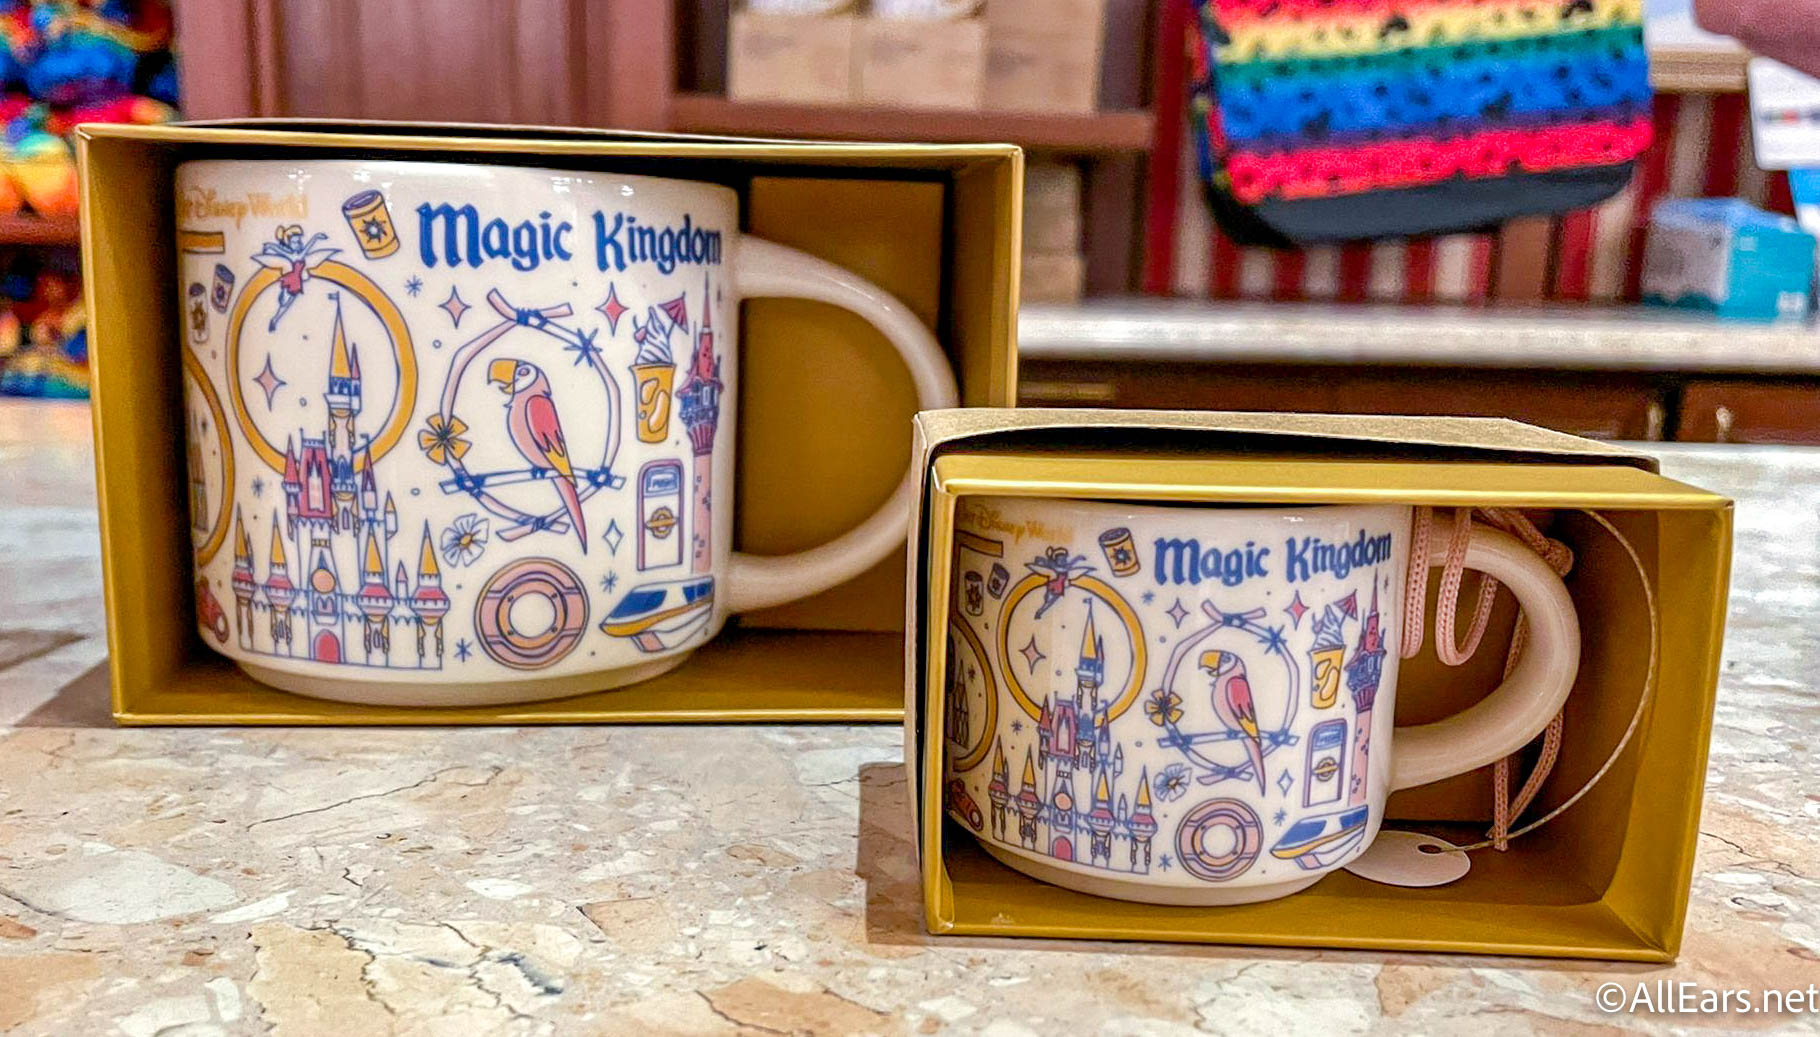 https://allears.net/wp-content/uploads/2021/11/2021-wdw-main-street-bakery-starbucks-new-magic-kingdom-mug-ornament.jpg